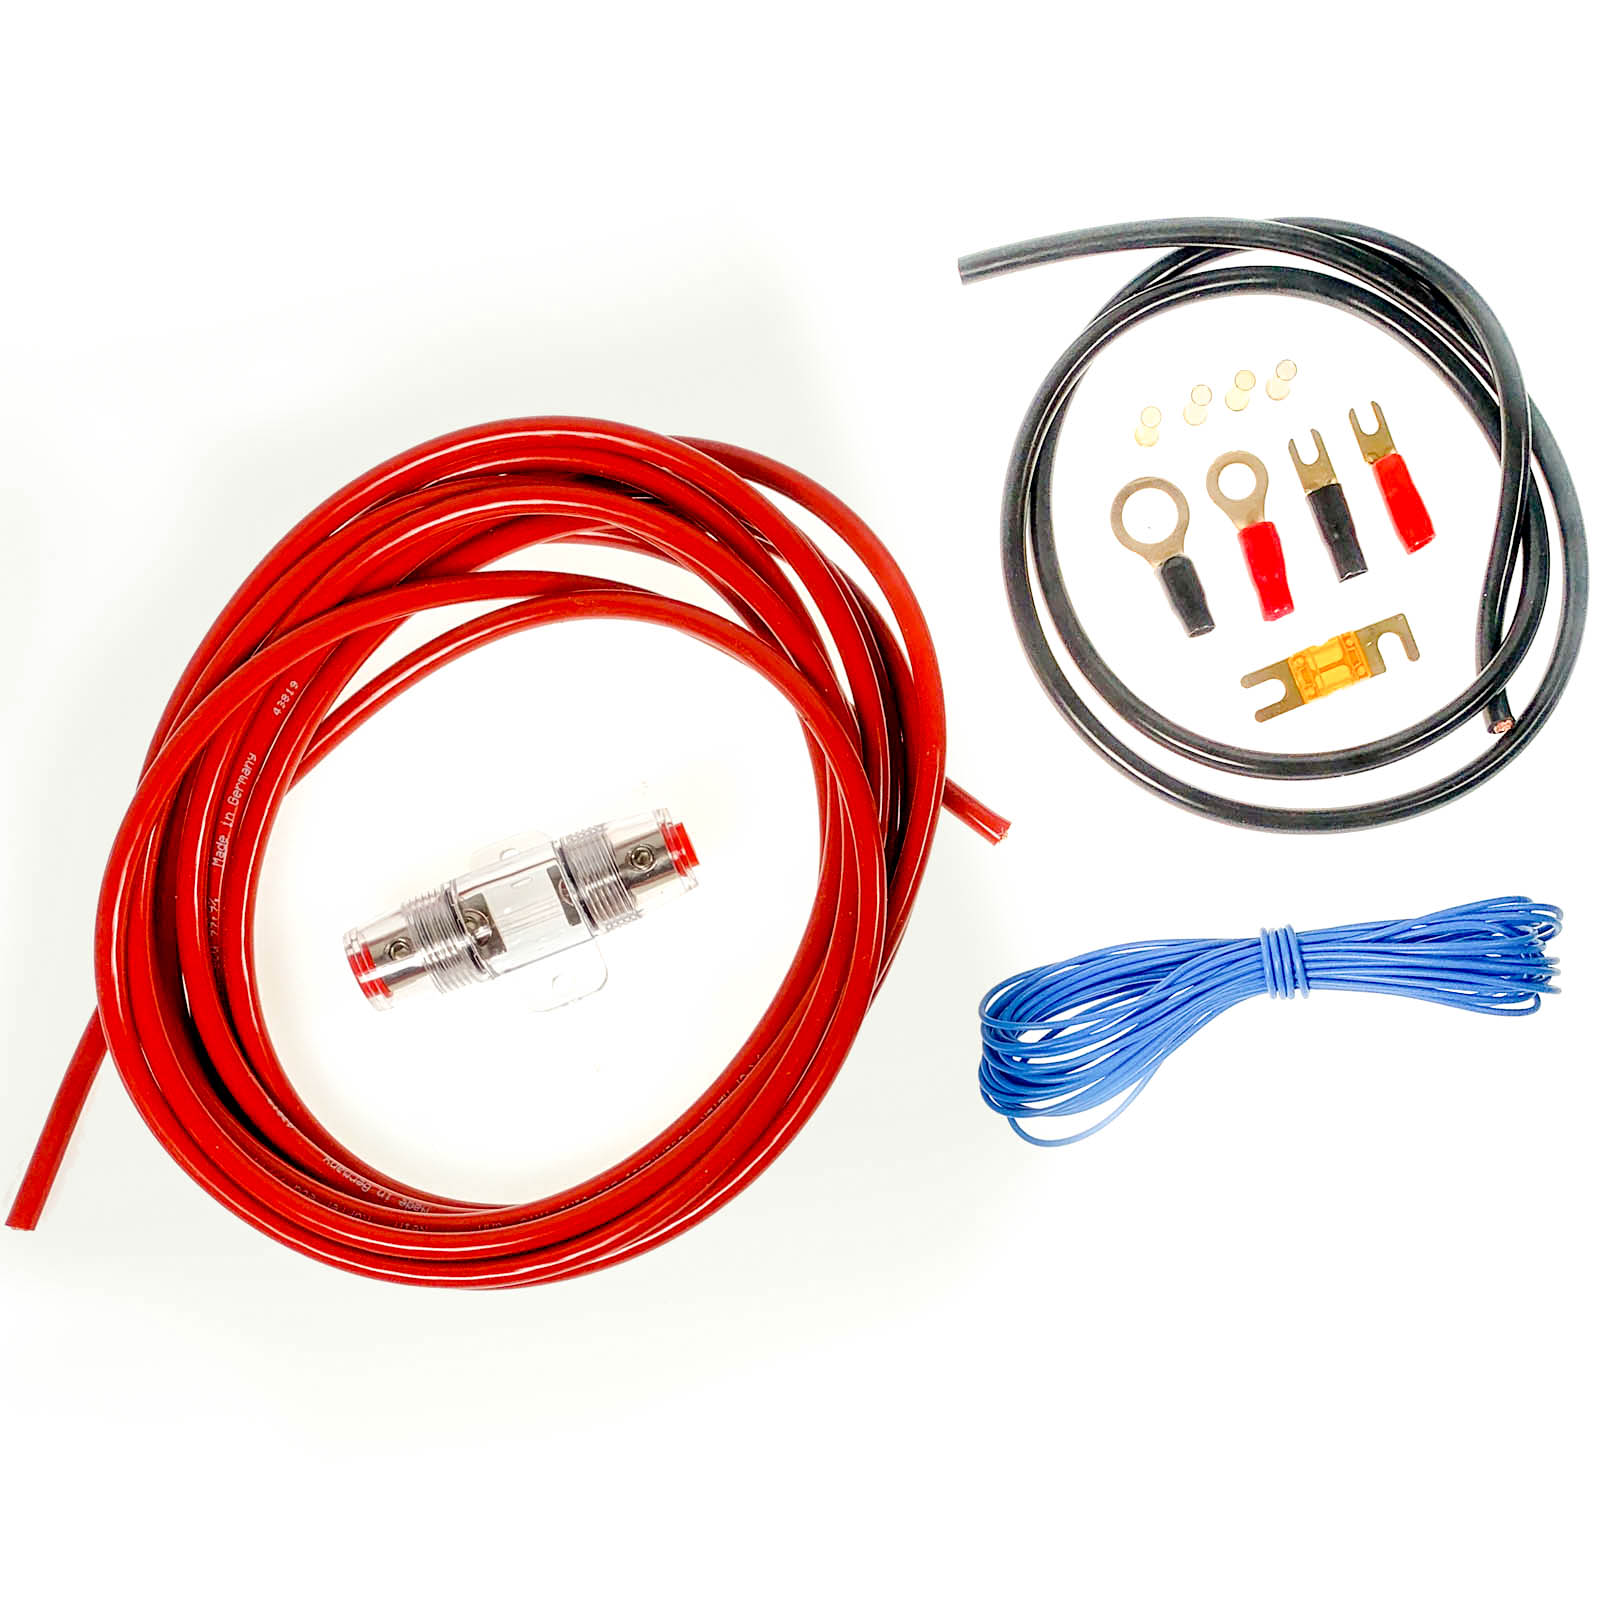 Crunch CRK10 10mm² Kabel Set CarHifi Auto Kabel Satz für Endstufe Verstärker Amp 